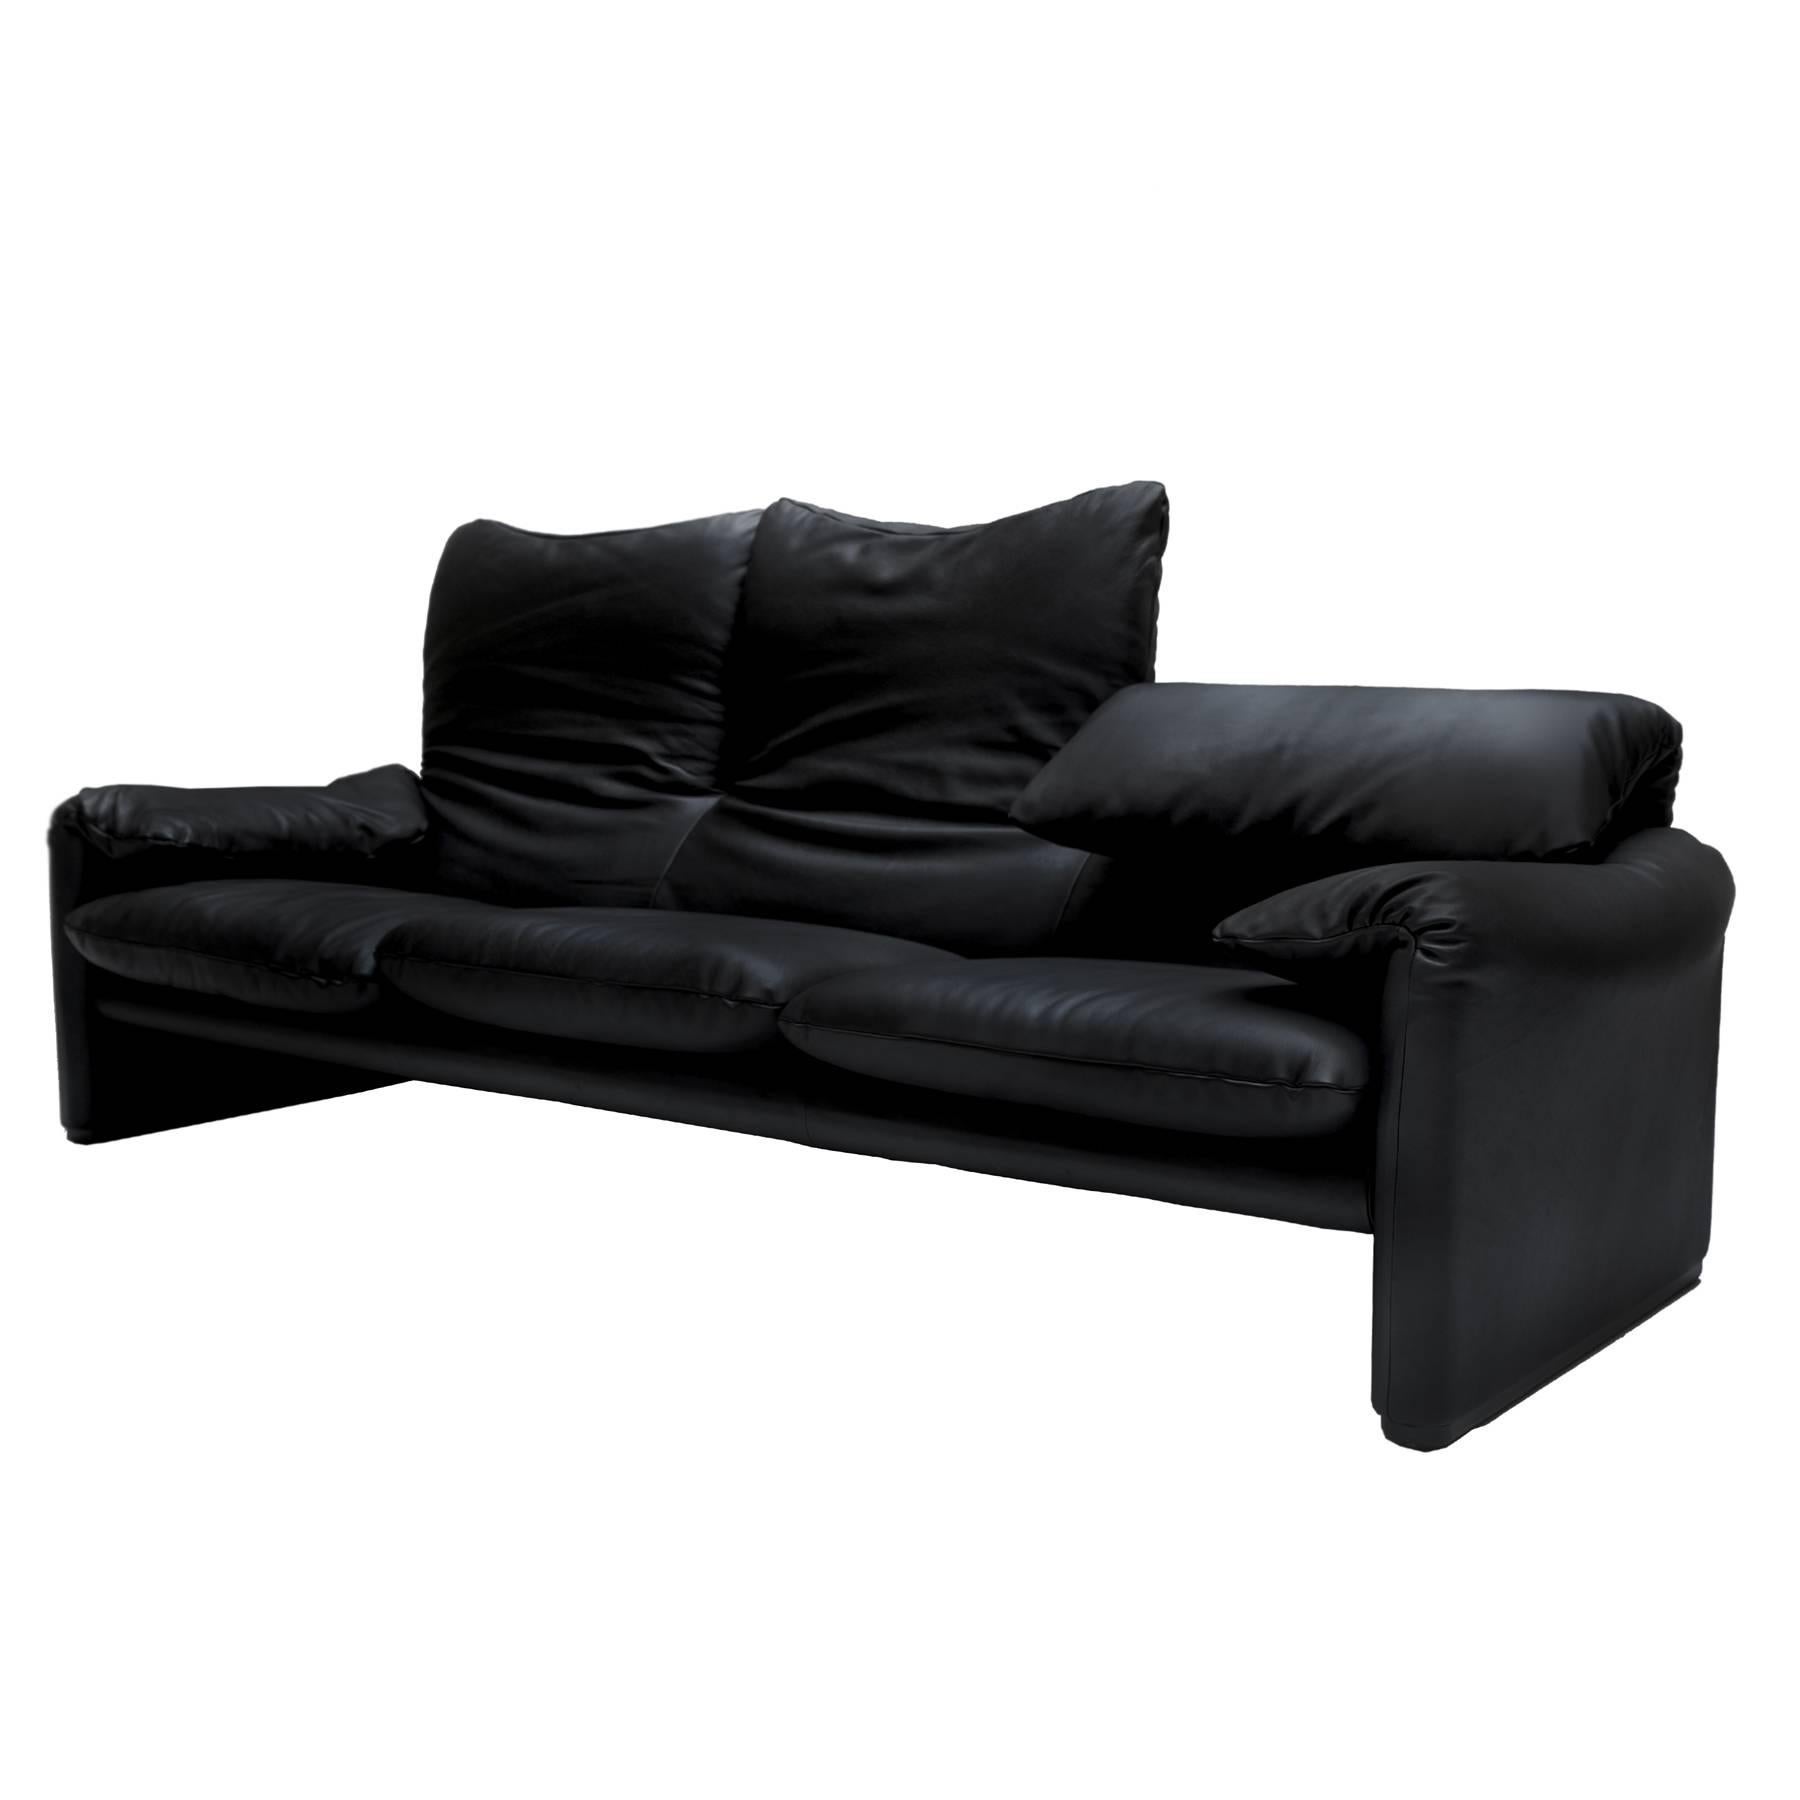 Three-Seater Black Leather Sofa "Maralunga" by Vico Magistretti for Cassina For Sale